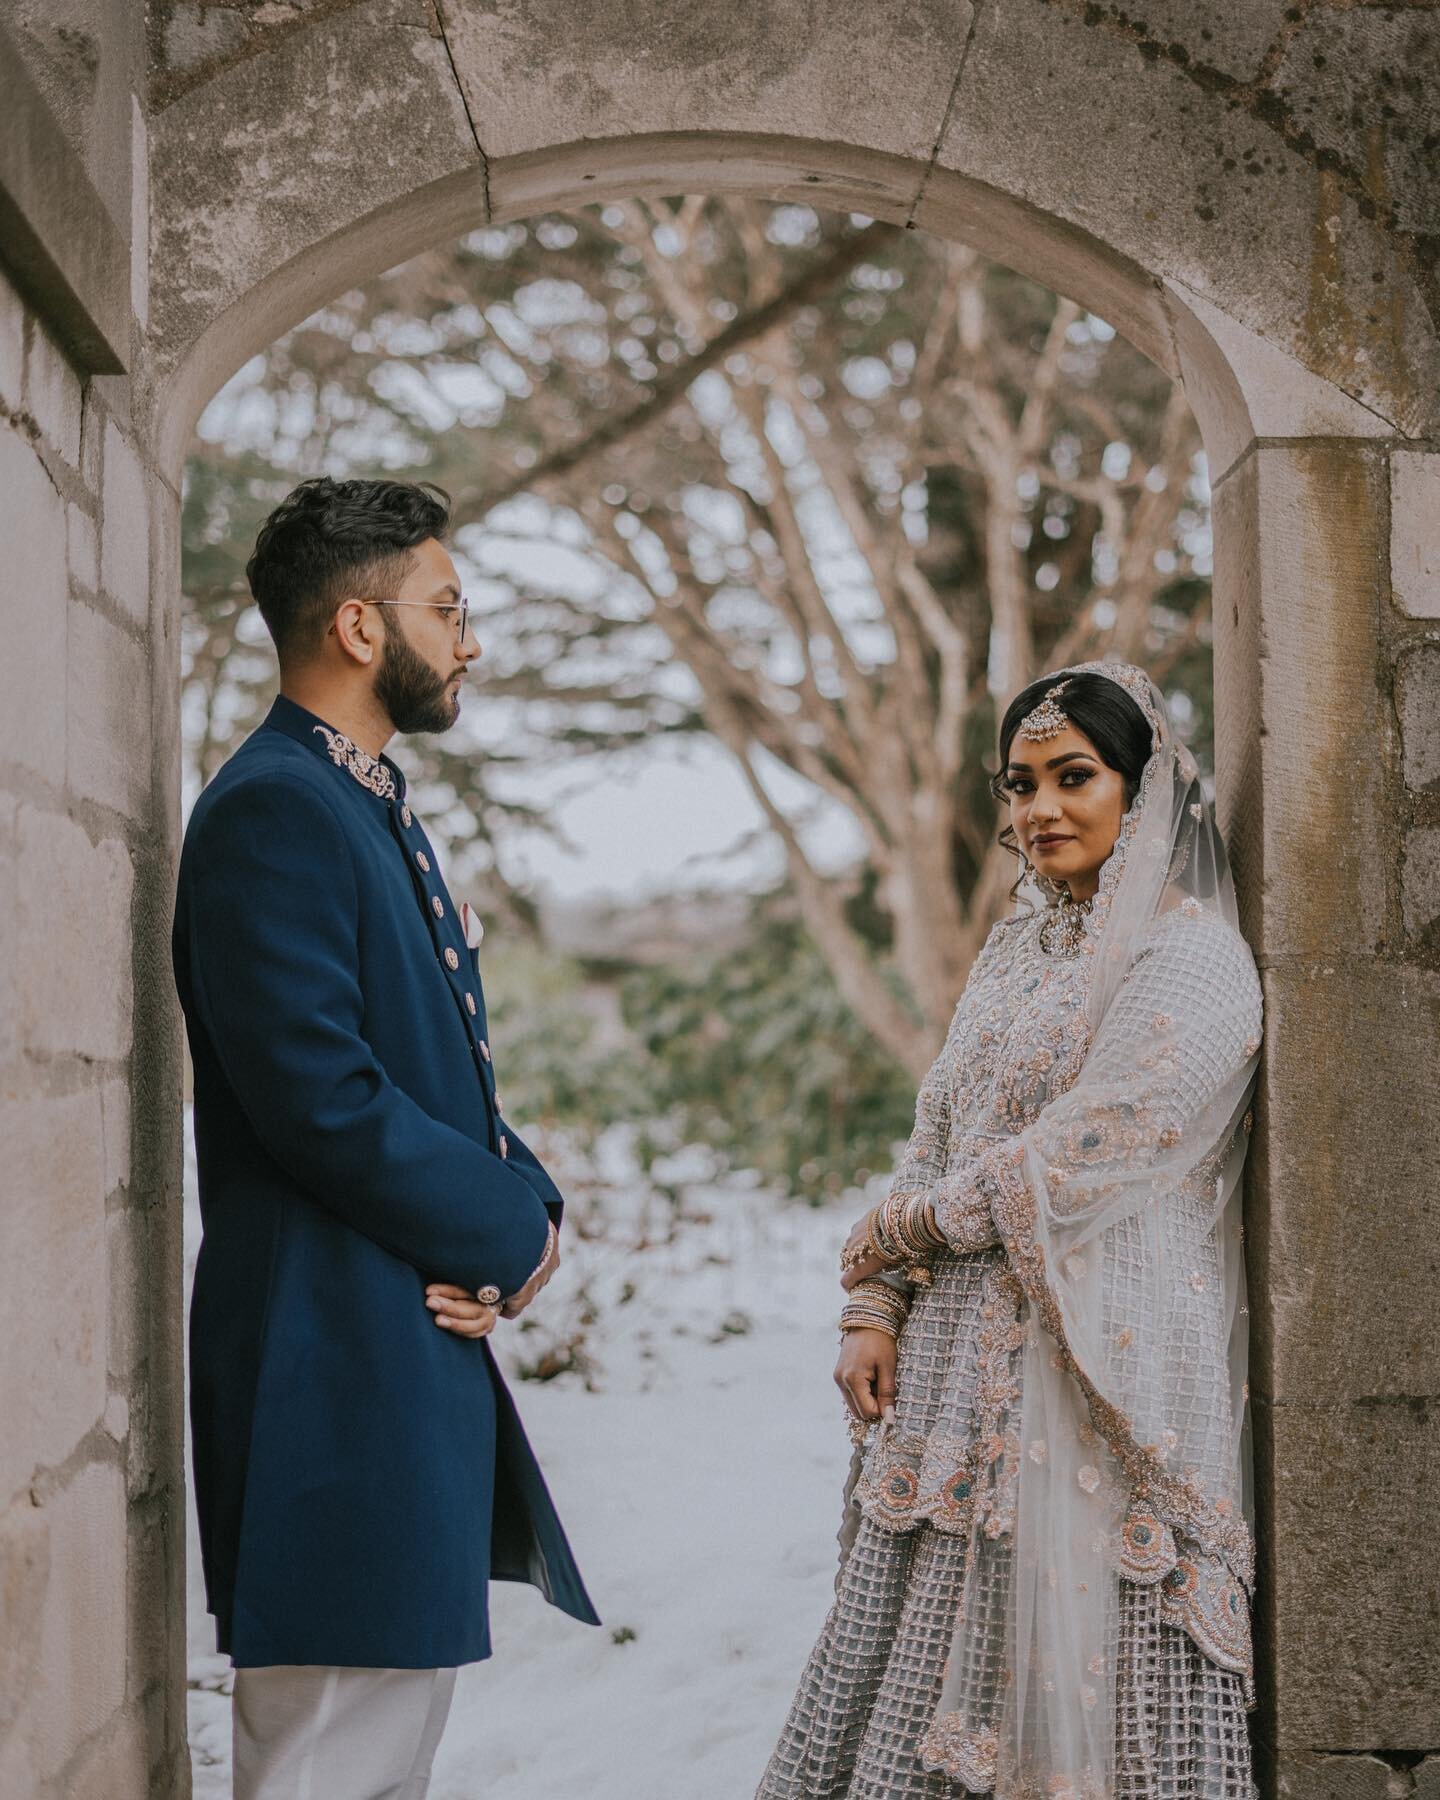 Nadia &amp; Adnan - January 9, 2022 - Long Island, New York
&bull;
&bull;
&bull;
&bull;
#muslimphotographer #beautifulwedding #nikkah #muslimcouple #love #nikkahday #weddingday #reception #bengaliwedding #bengalinikkah #pakistaniweddings #weddingseas